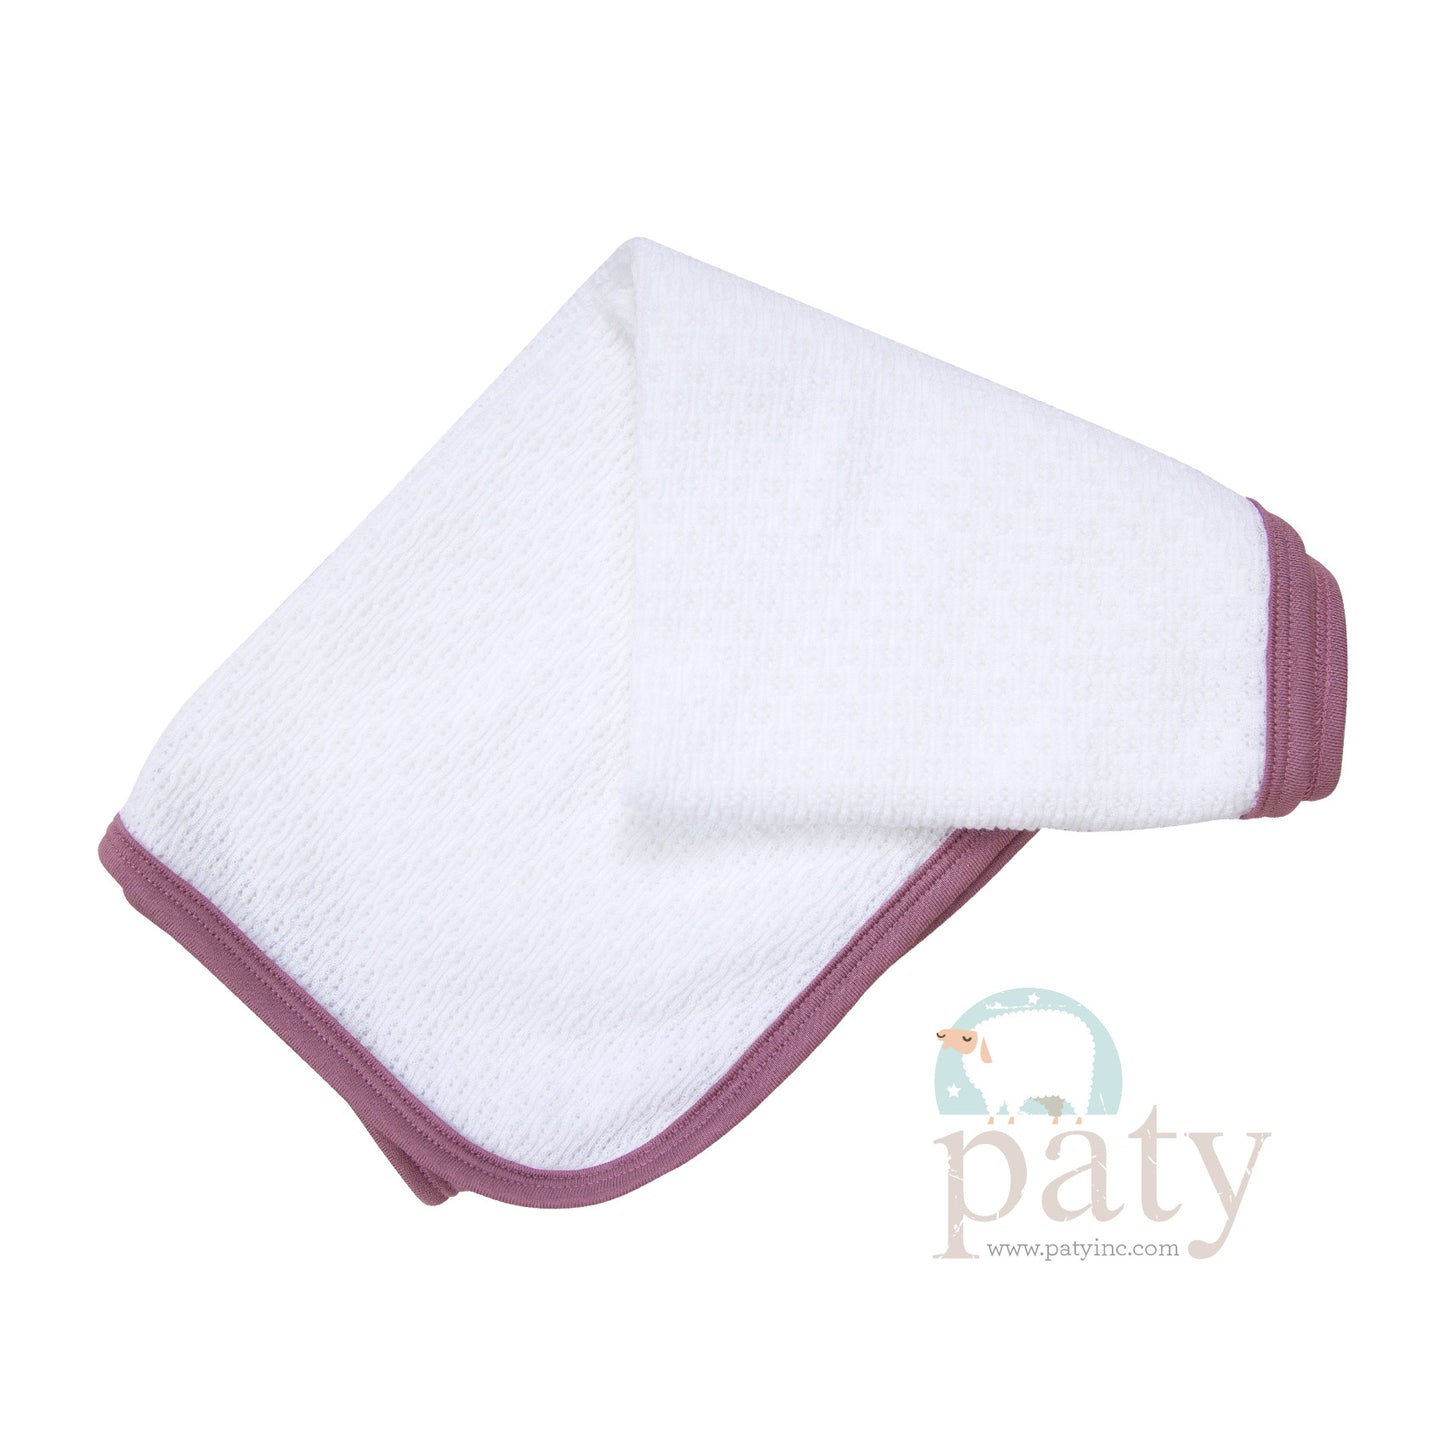 Paty Knit Receiving/Swaddle Blanket, Pima Trim